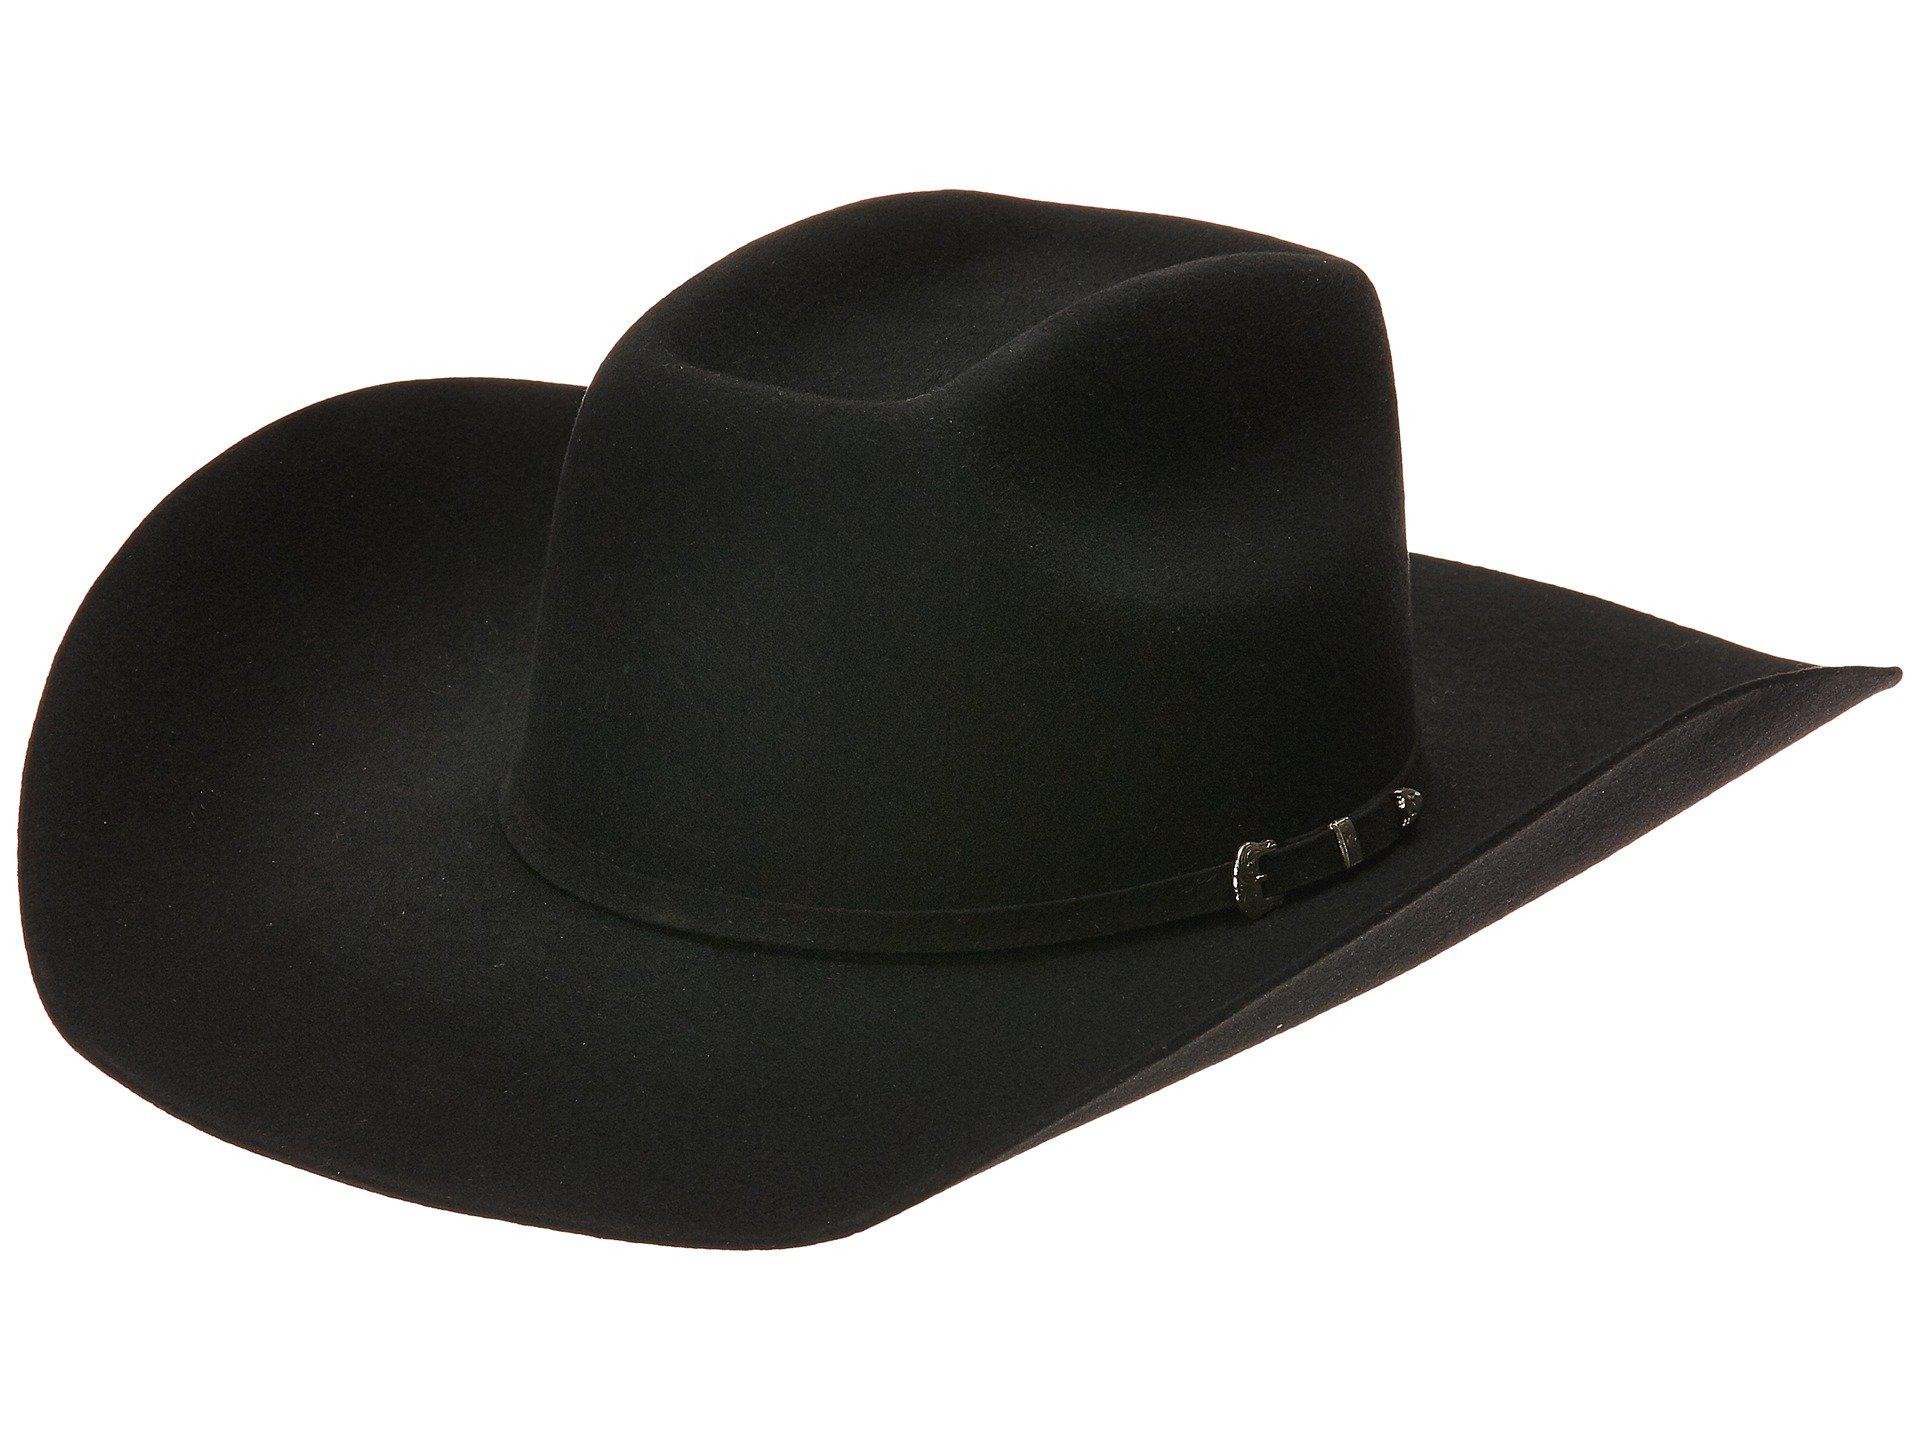 Lyst - Ariat A7520201 (black) Cowboy Hats in Black for Men